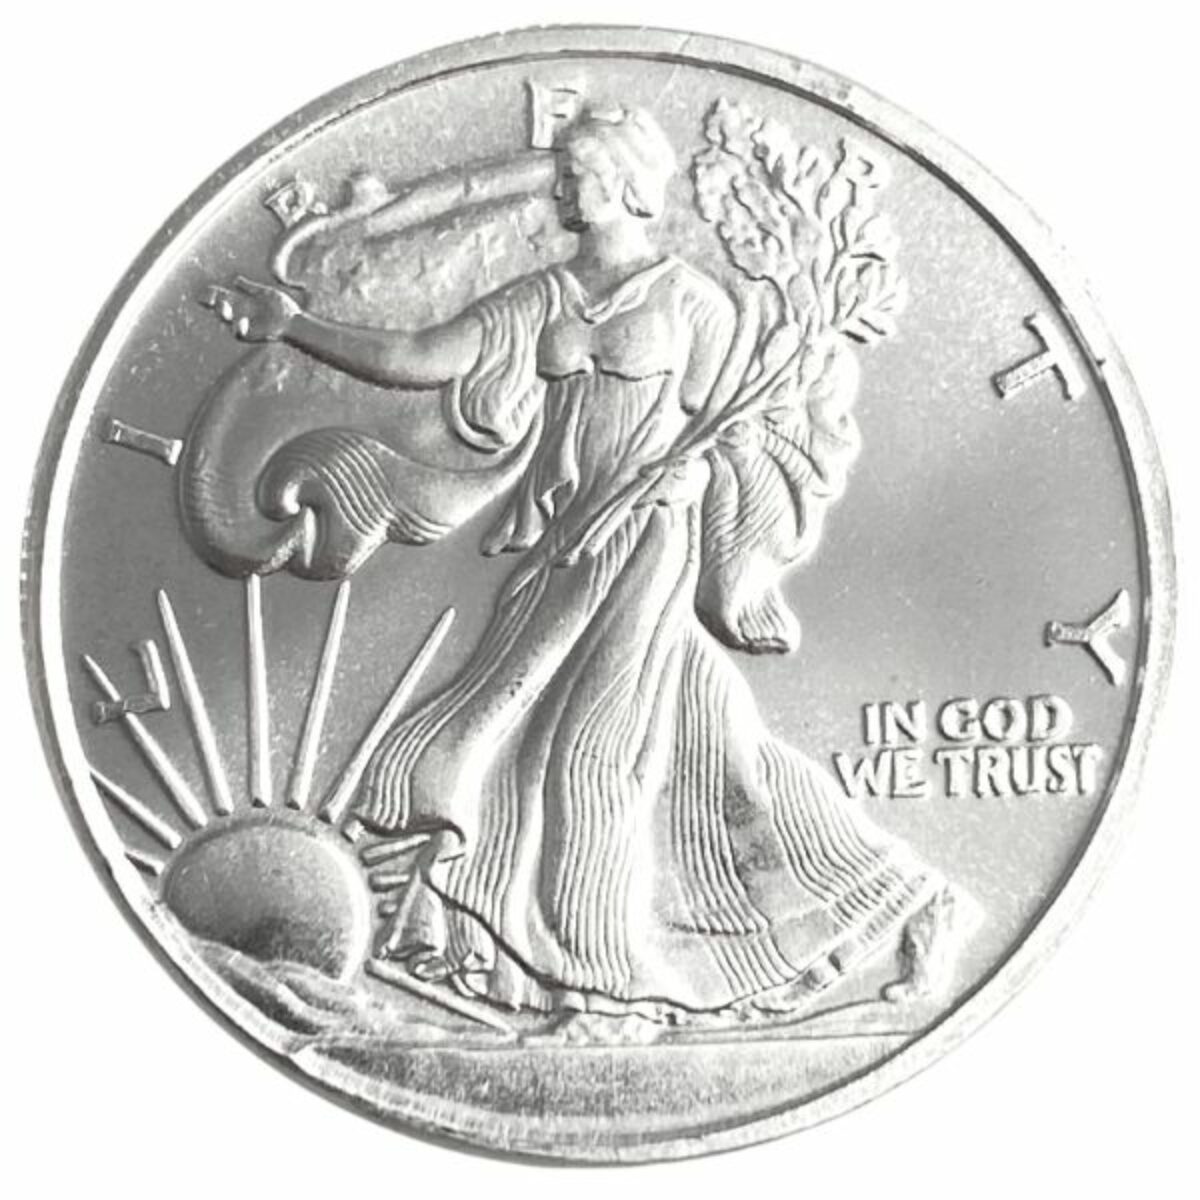 Classic Rare Coins - Half Dollars - Walking Liberty Half Dollars - Page 1 - Bullion Shark